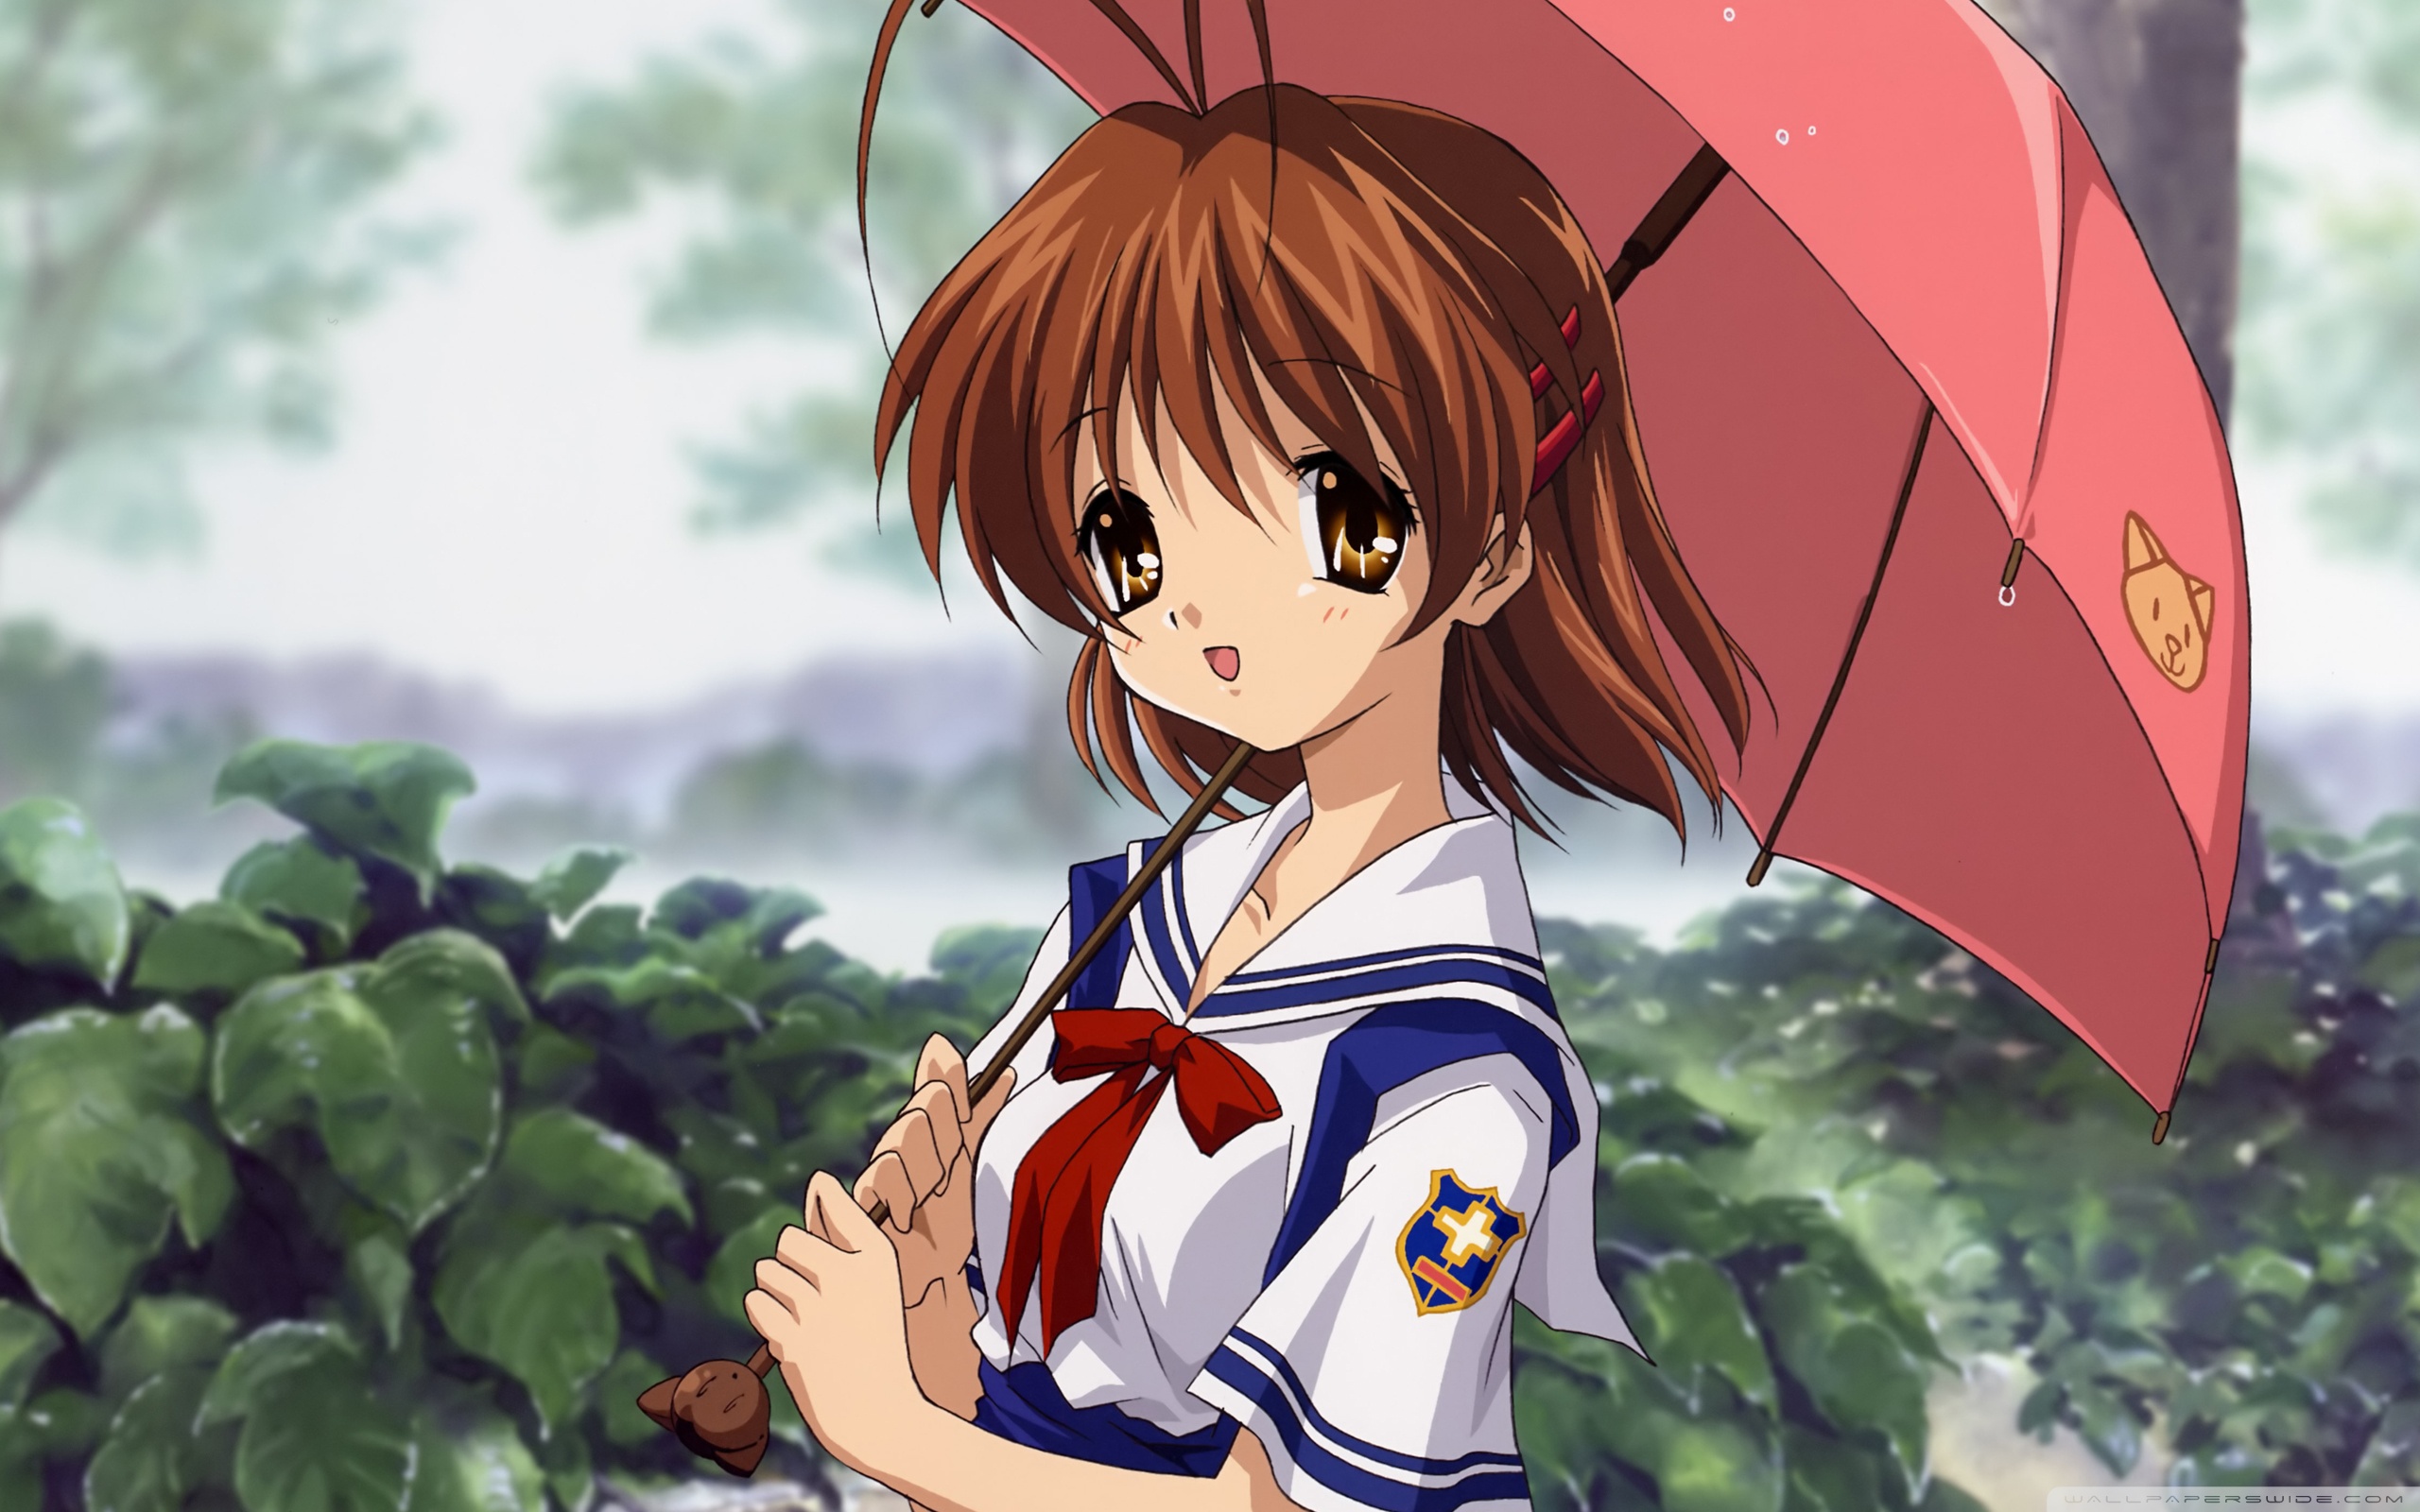 Rain Anime Ultra HD Desktop Background Wallpaper for : Tablet : Smartphone